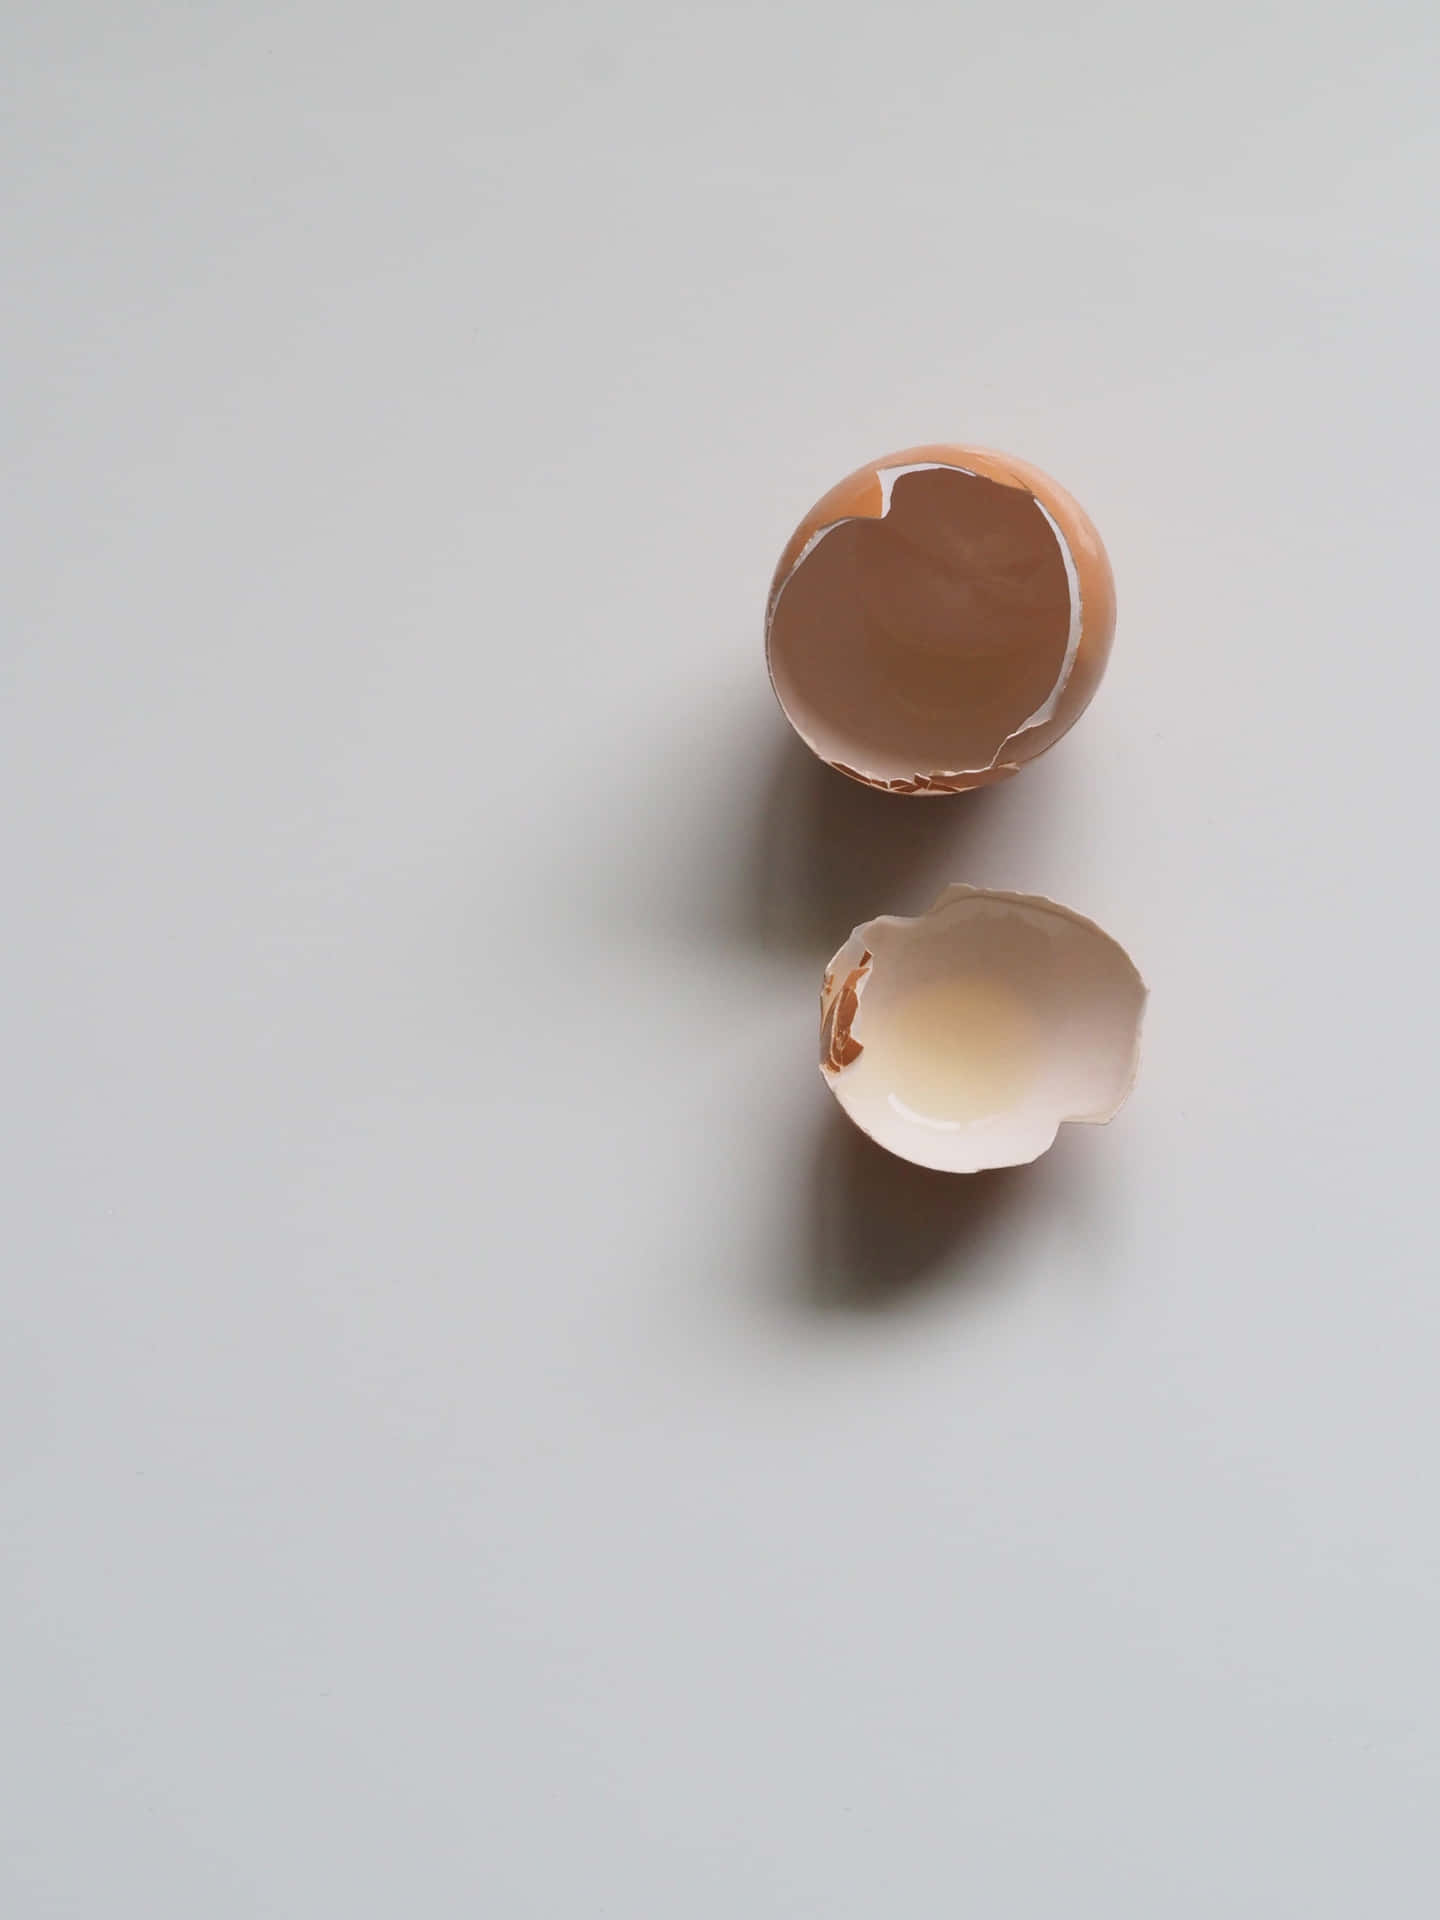 Empty Egg Shell